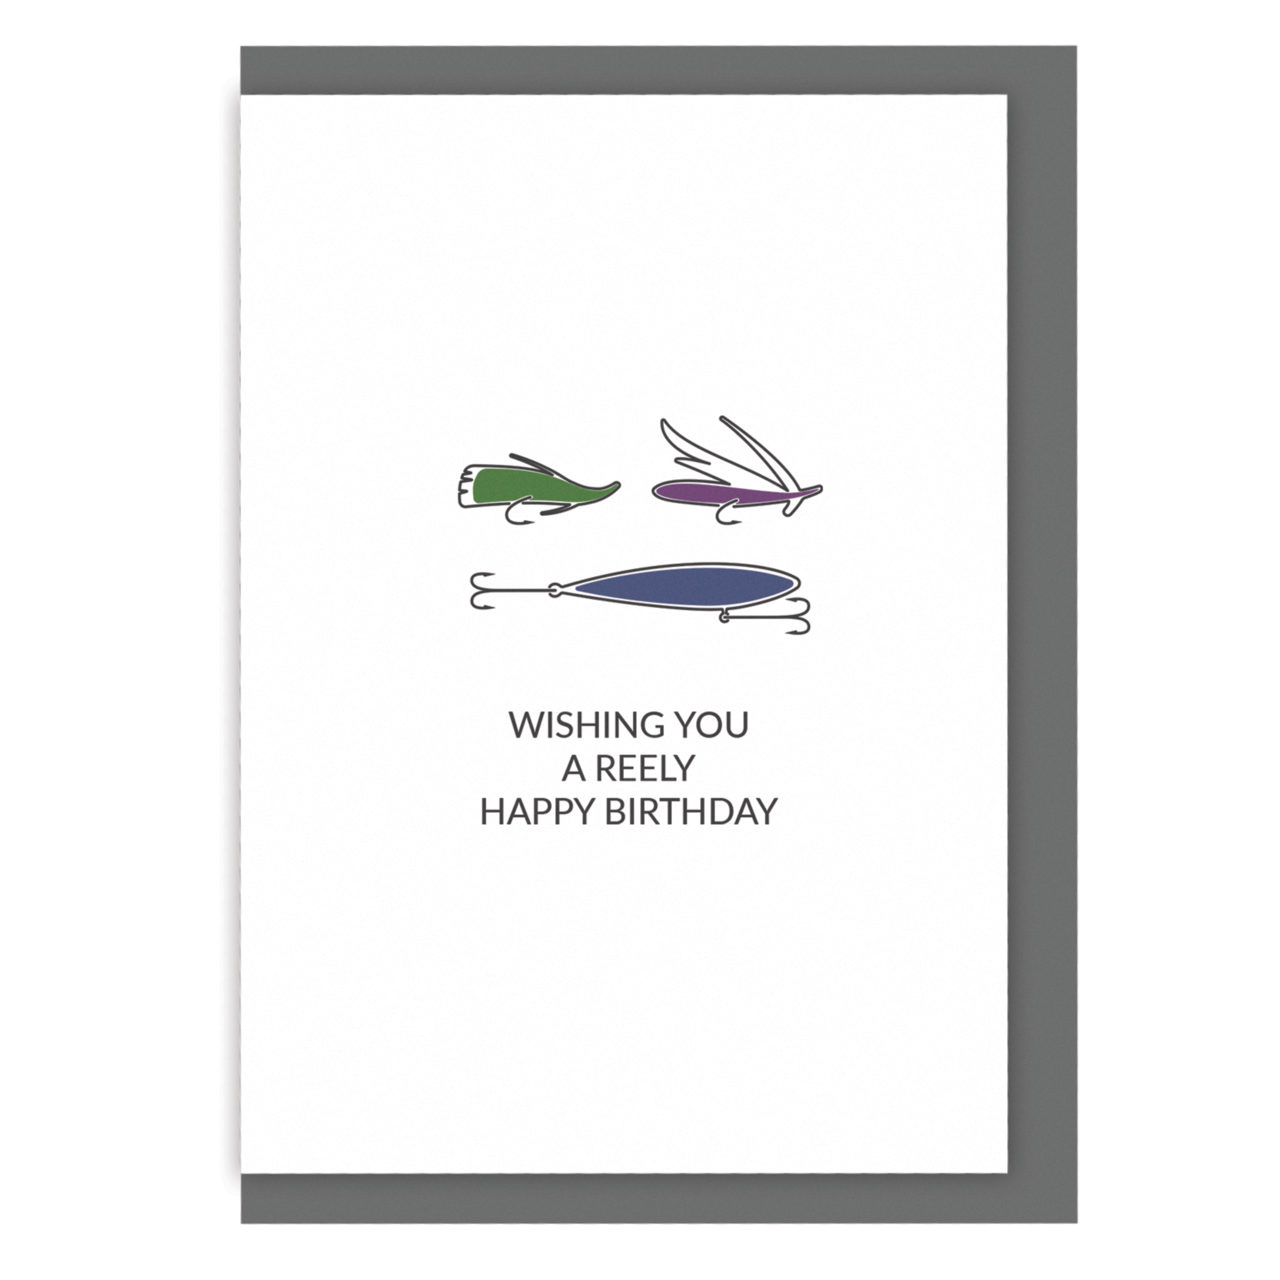 Fishing birthday card wishing you a reely happy birthday